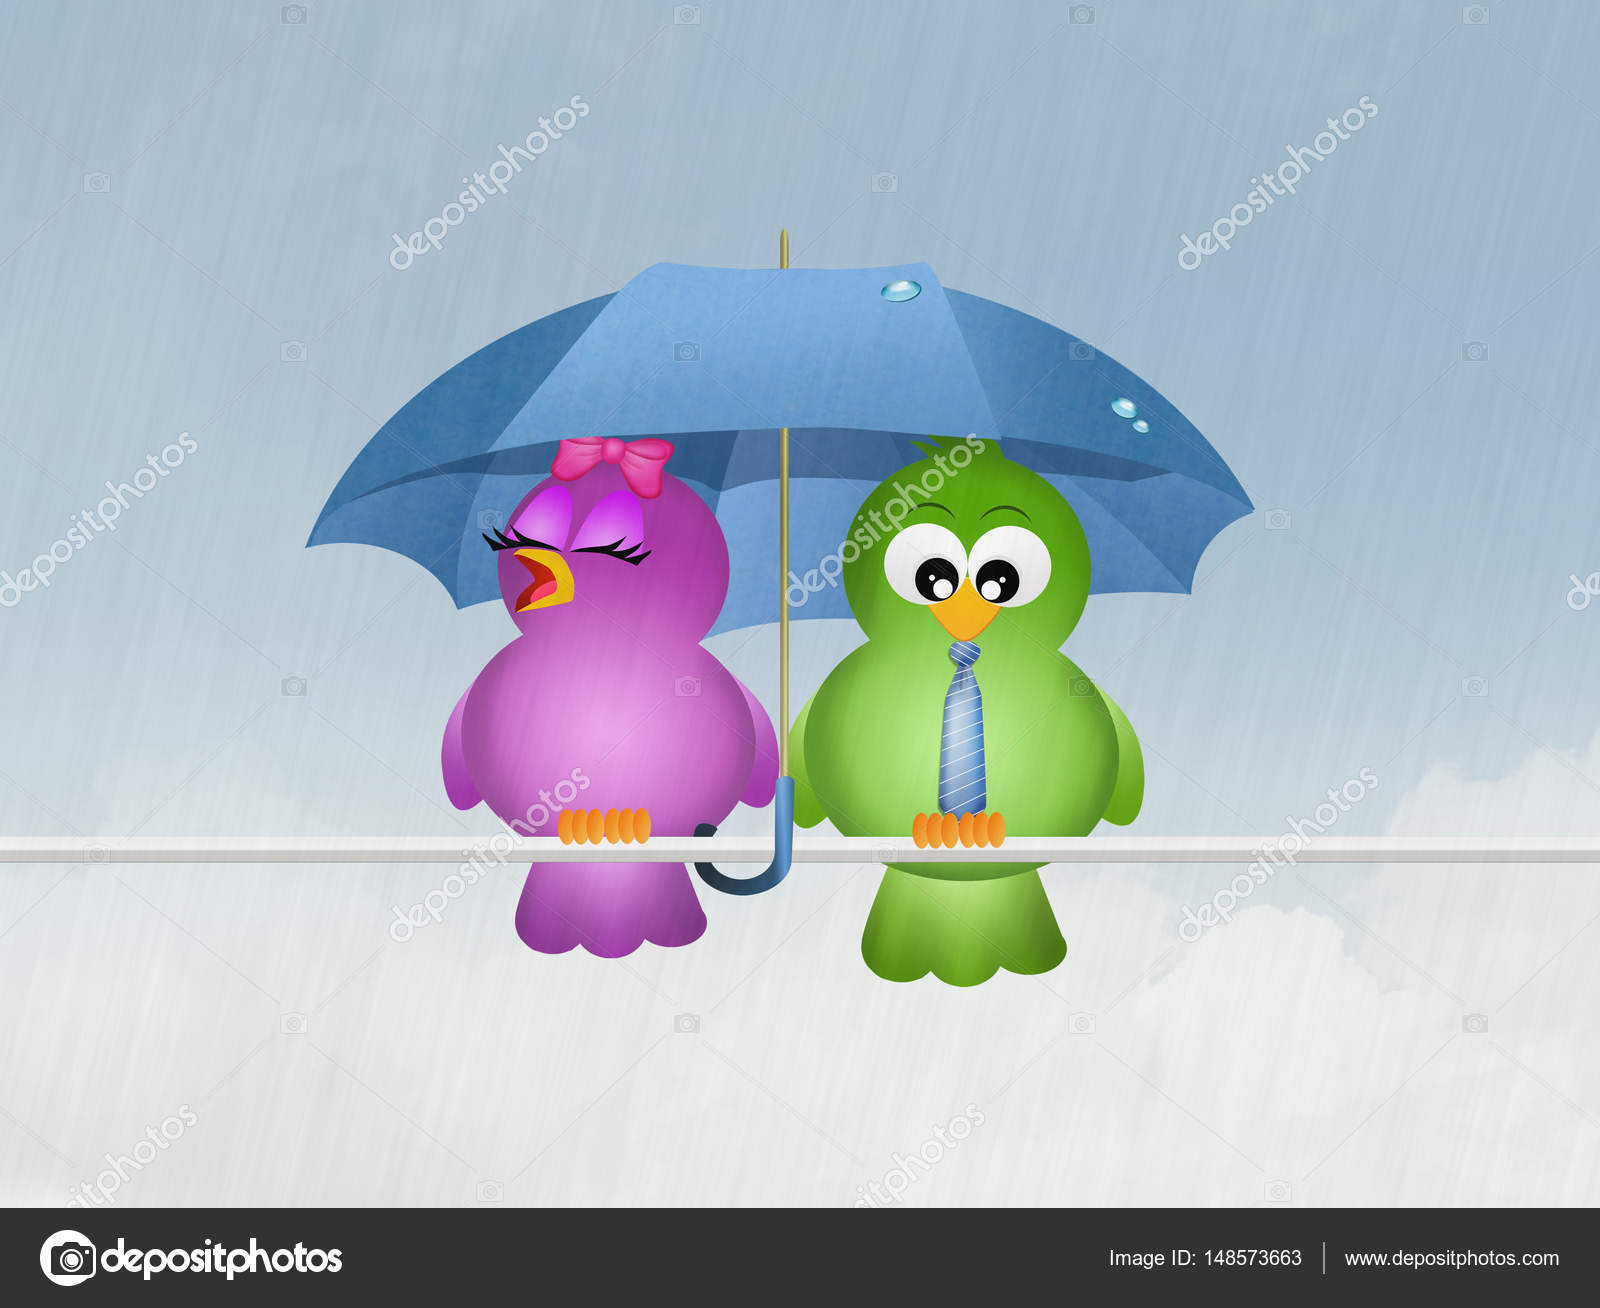 Cogli l'attimo ... - Pagina 10 Depositphotos_148573663-stock-photo-birds-in-the-rain